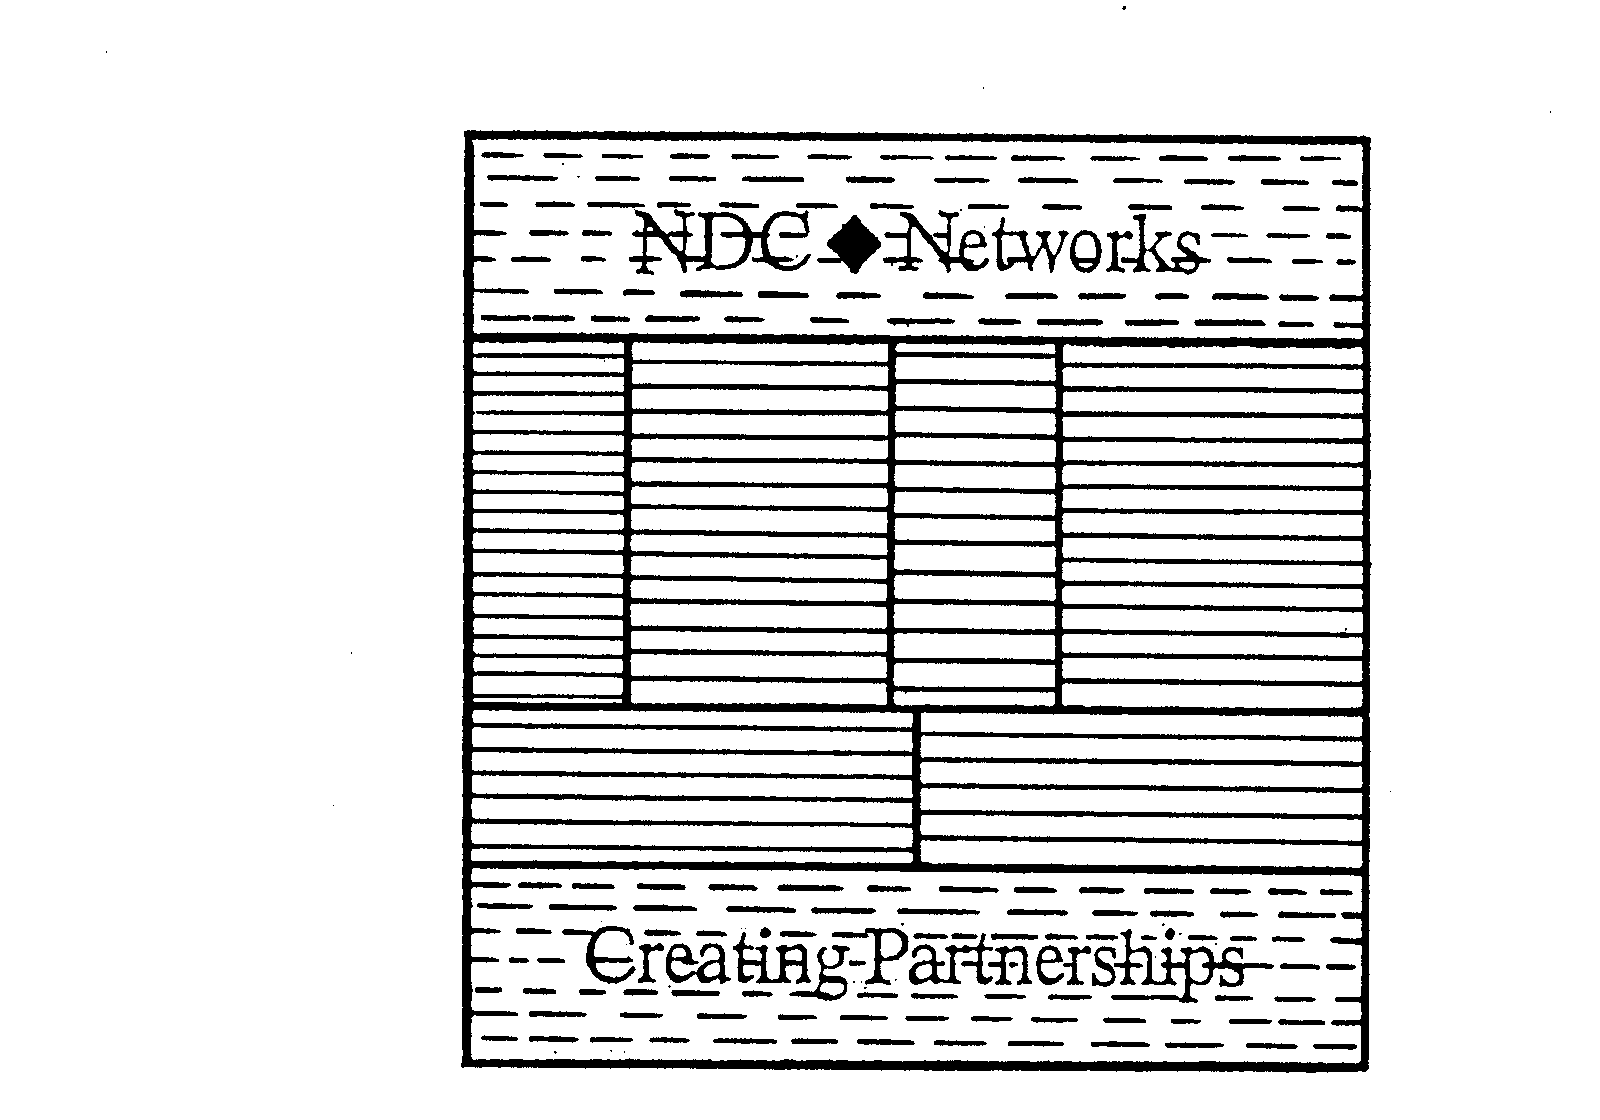  NDC NETWORKS CREATING PARTNERSHIPS